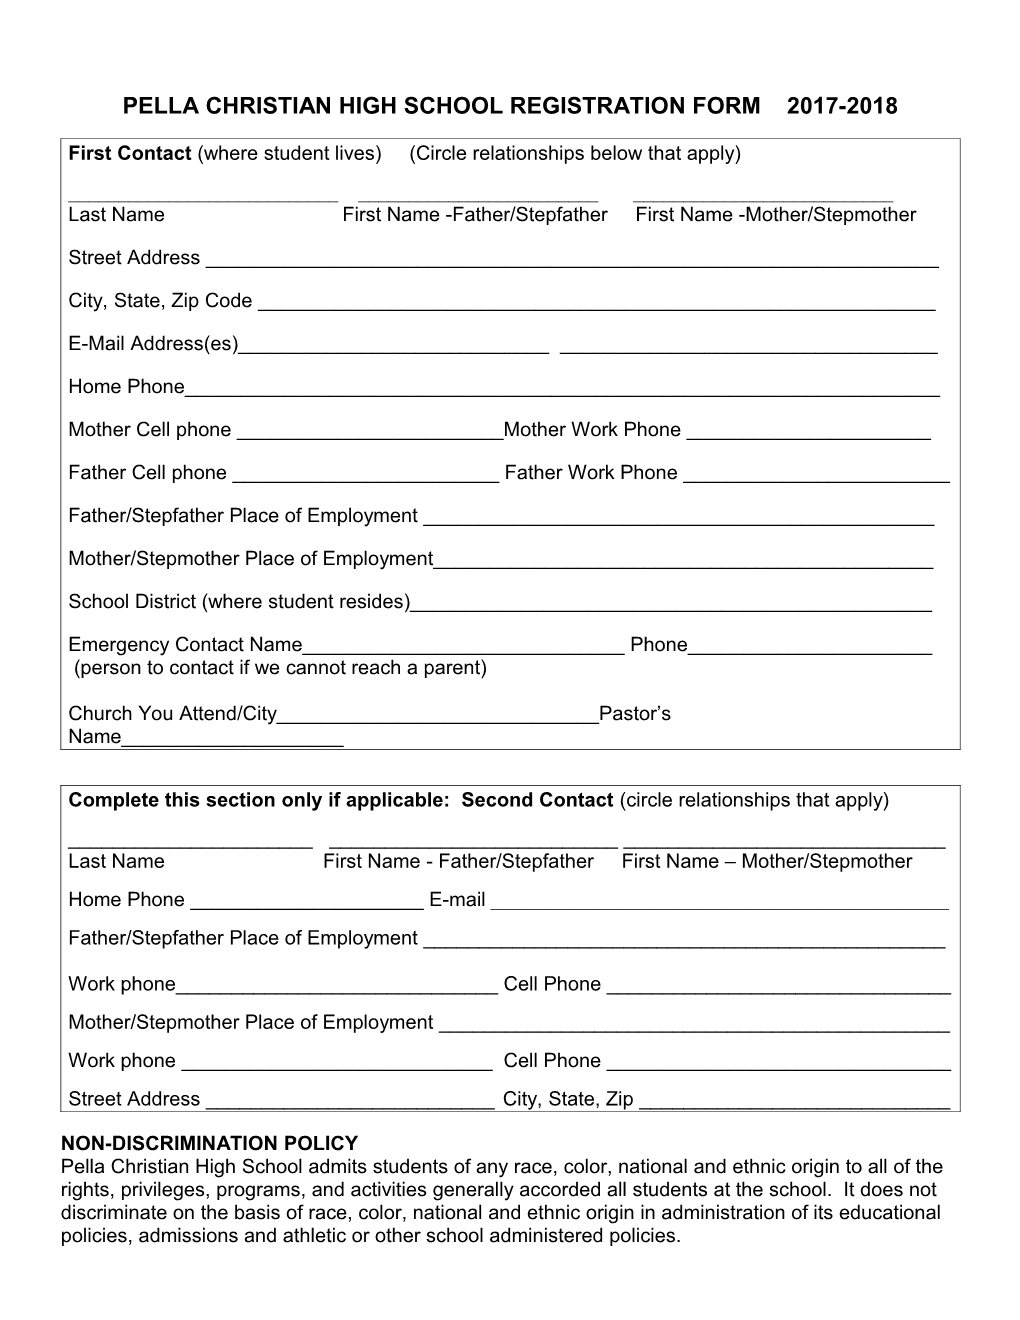 Pella Christian High School Registration Form 2017-2018